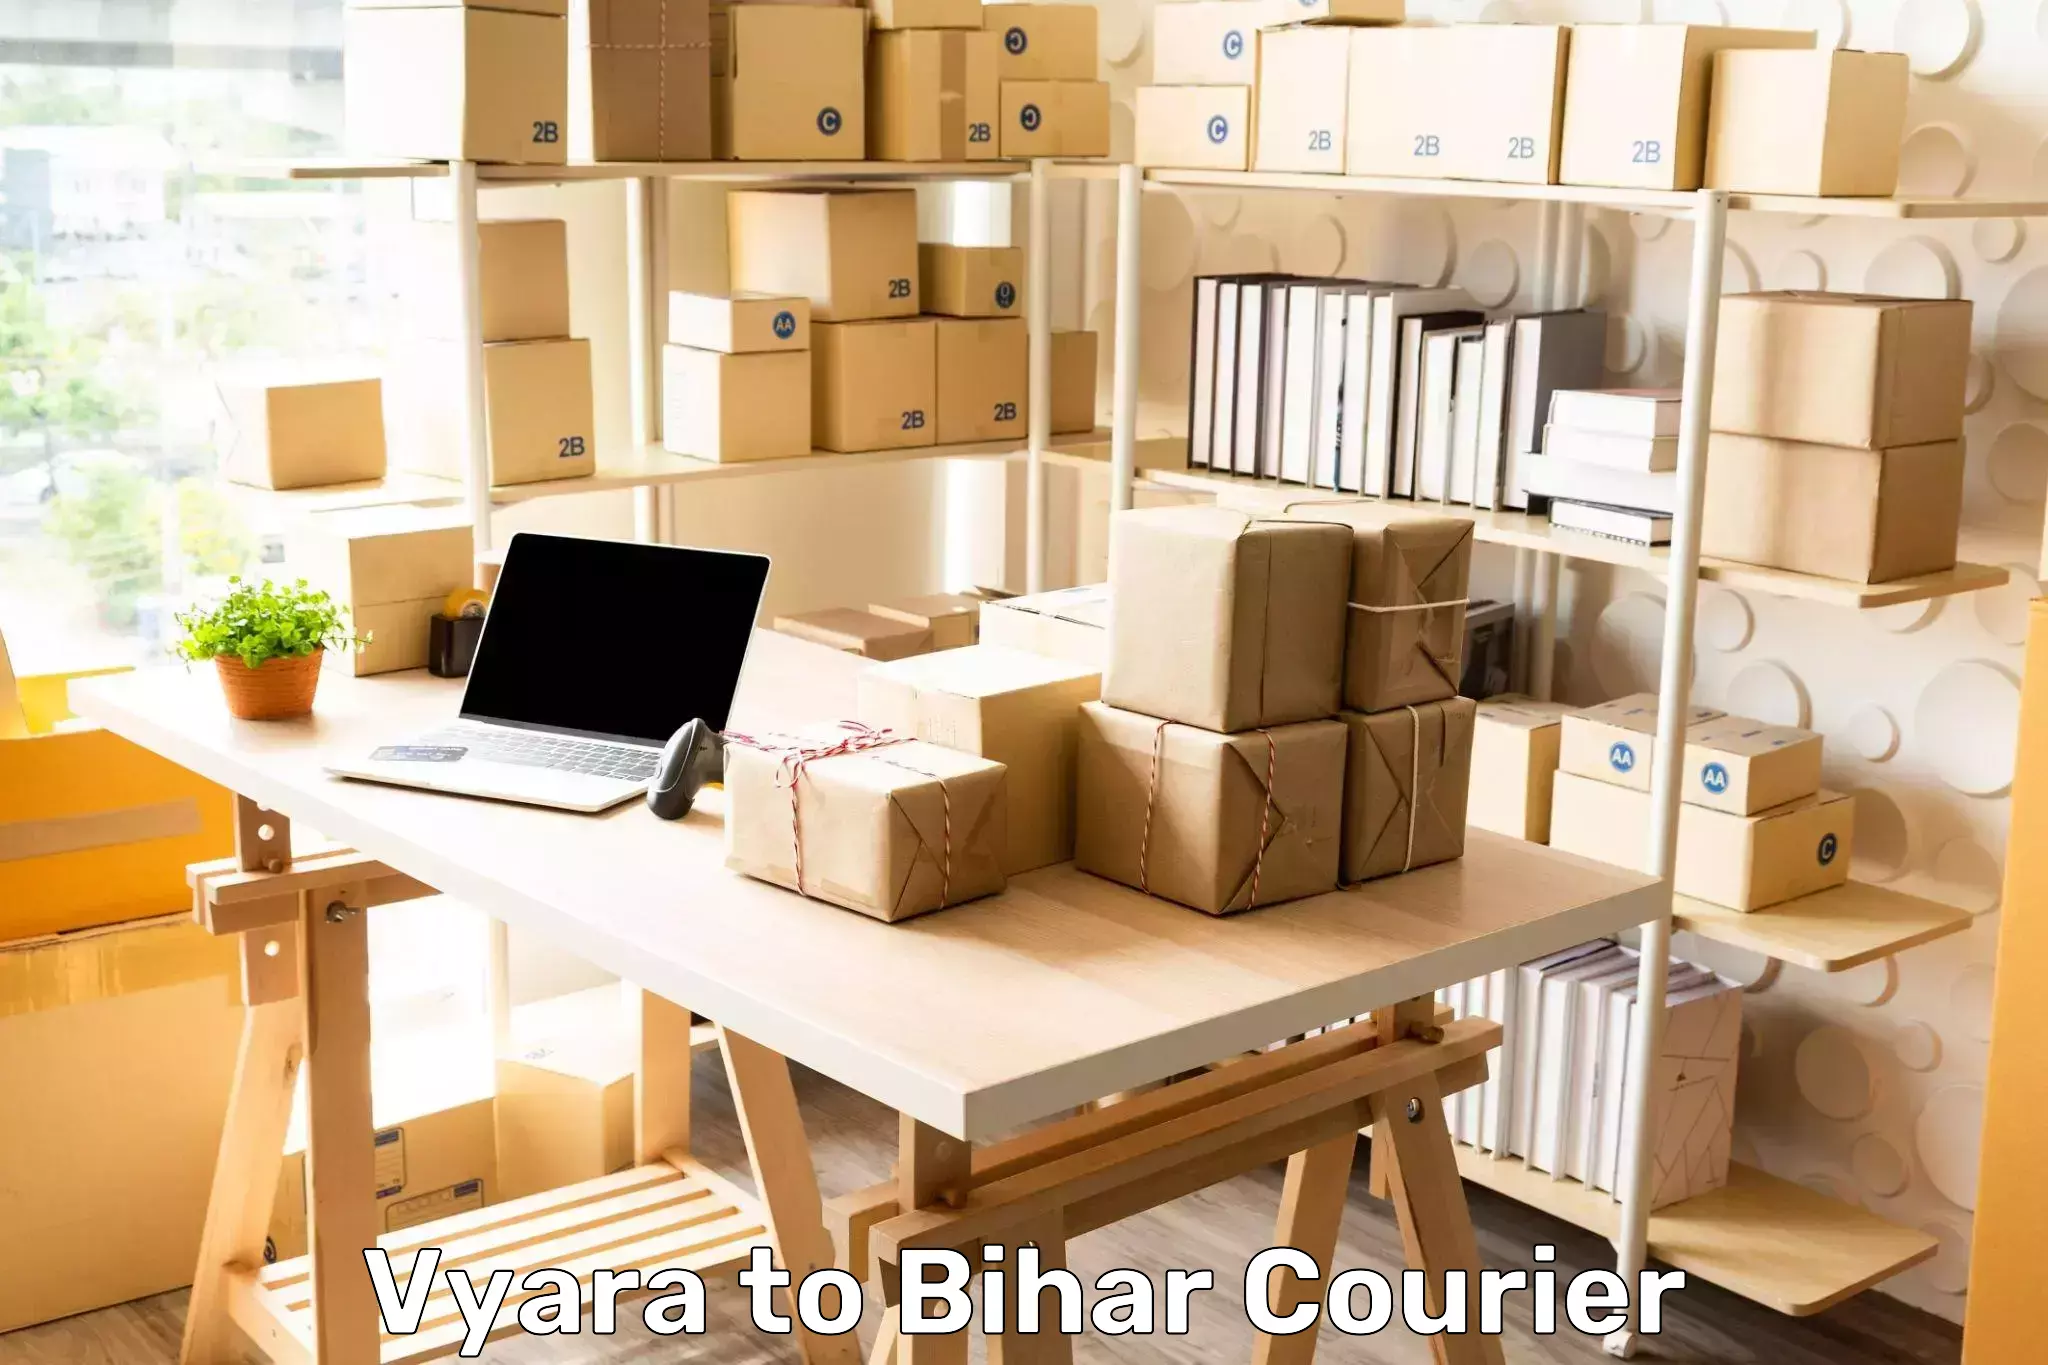 Multi-modal transportation Vyara to Bihar